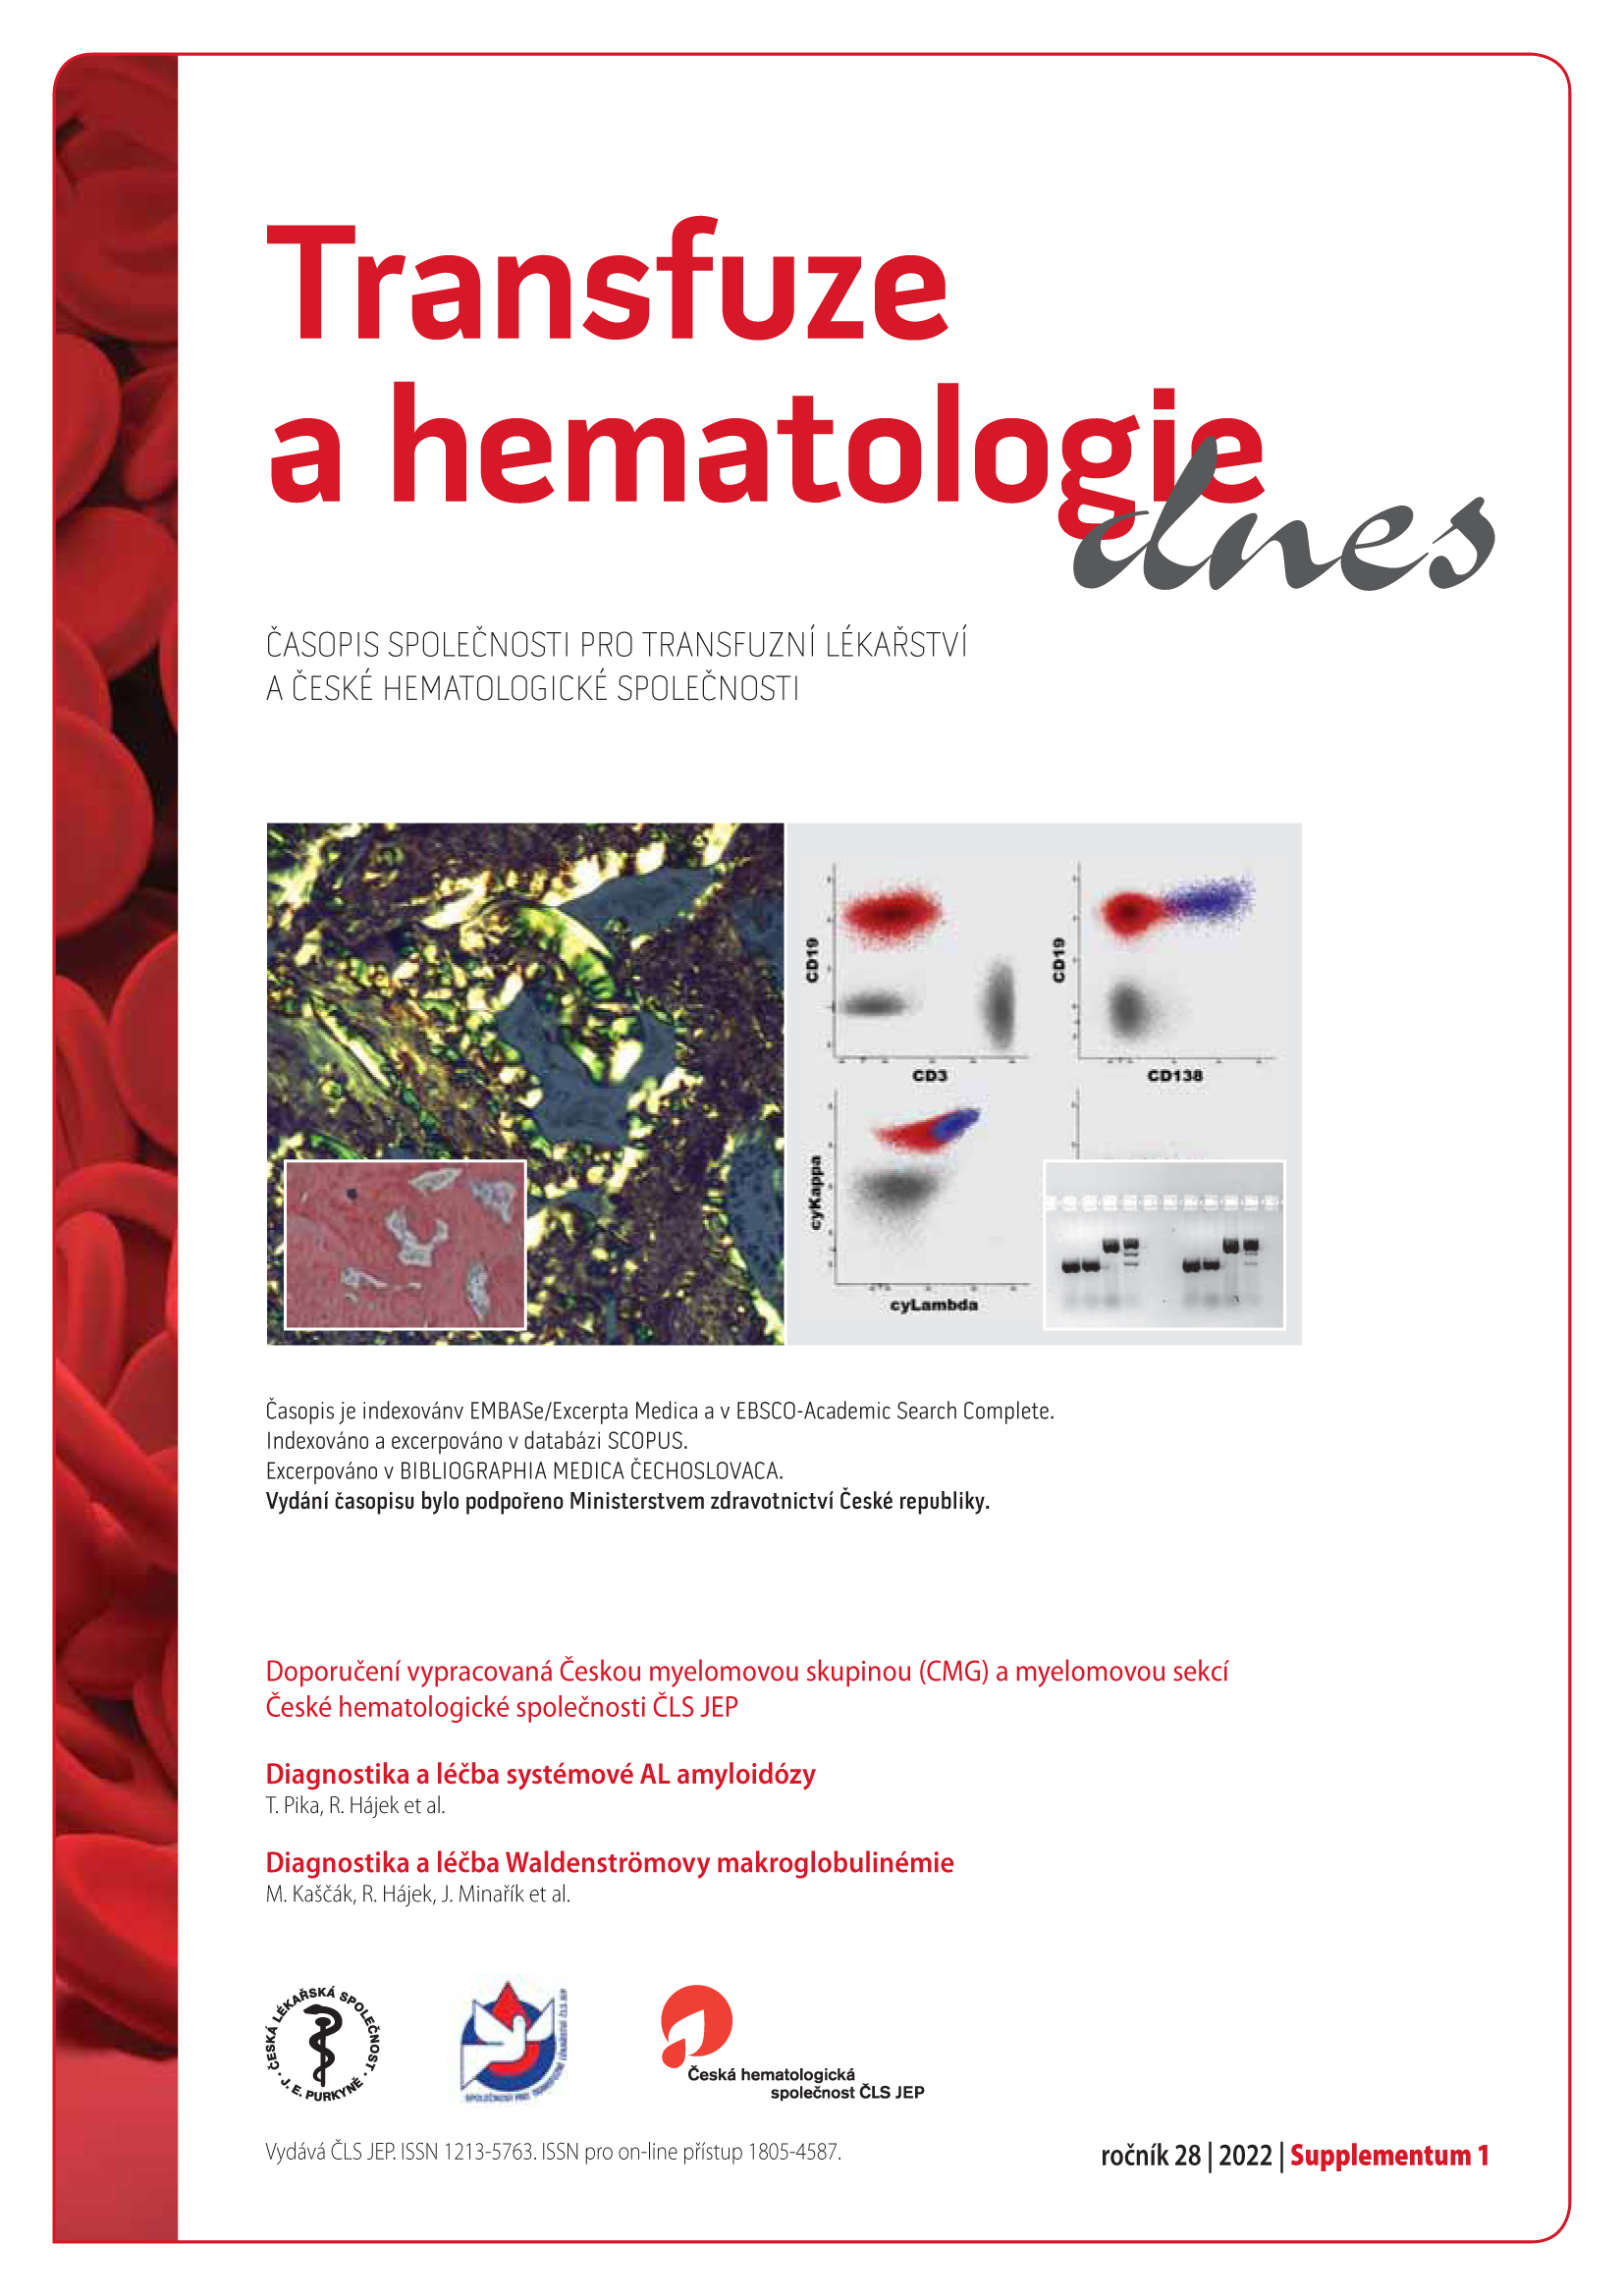 					Náhled Vol 28 No Supplementum 1 (2022): Transfuze a hematologie dnes
				